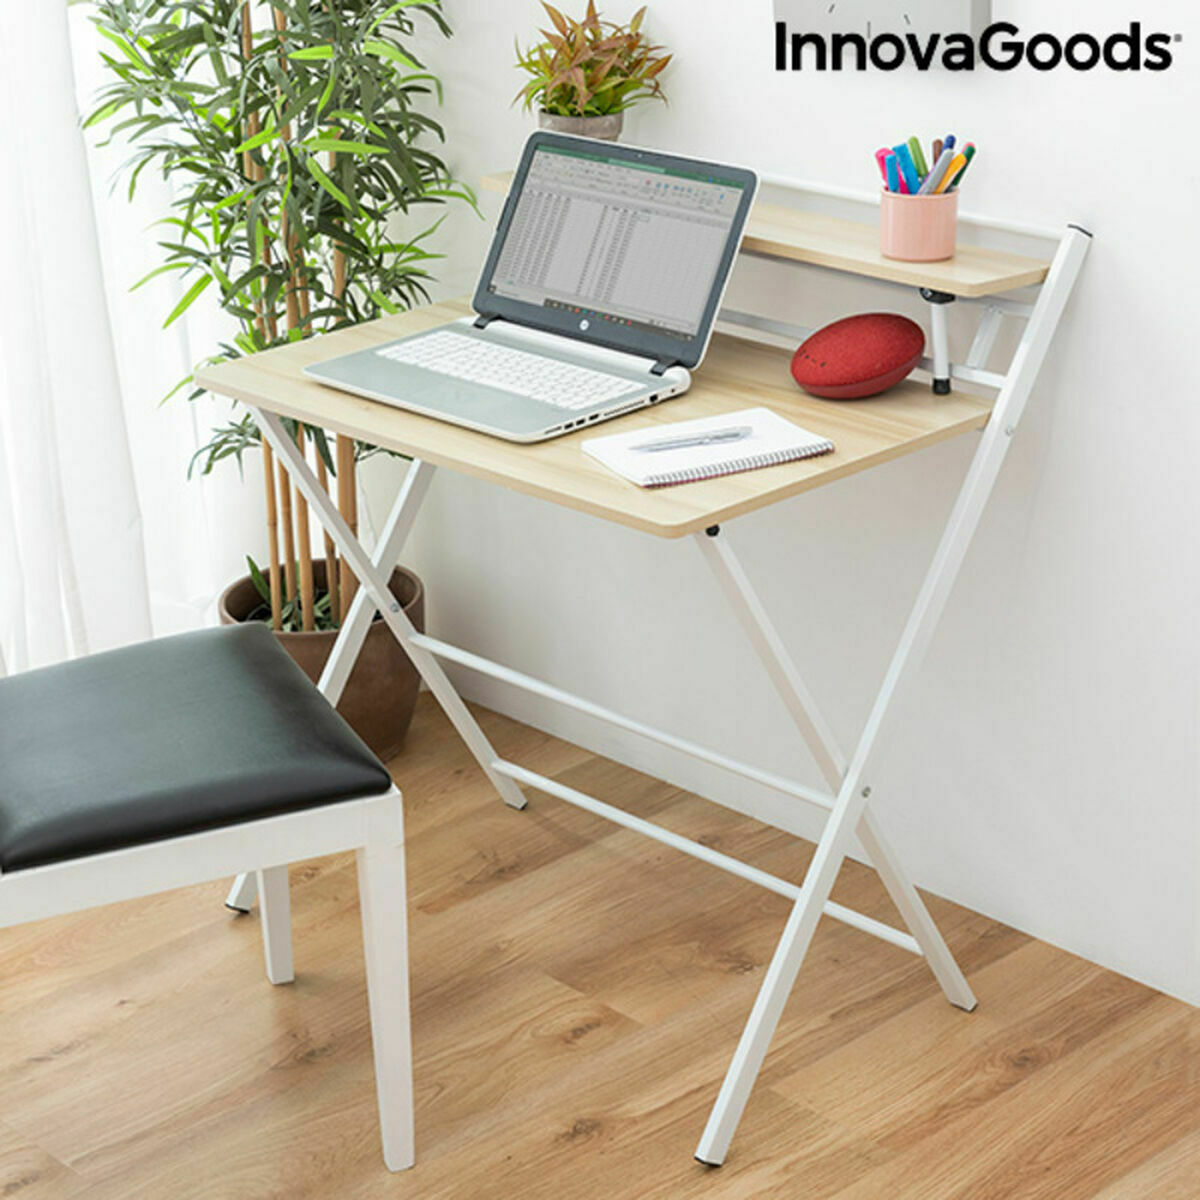 Folding Desk with Shelf InnovaGoods Tablezy (Refurbished B)